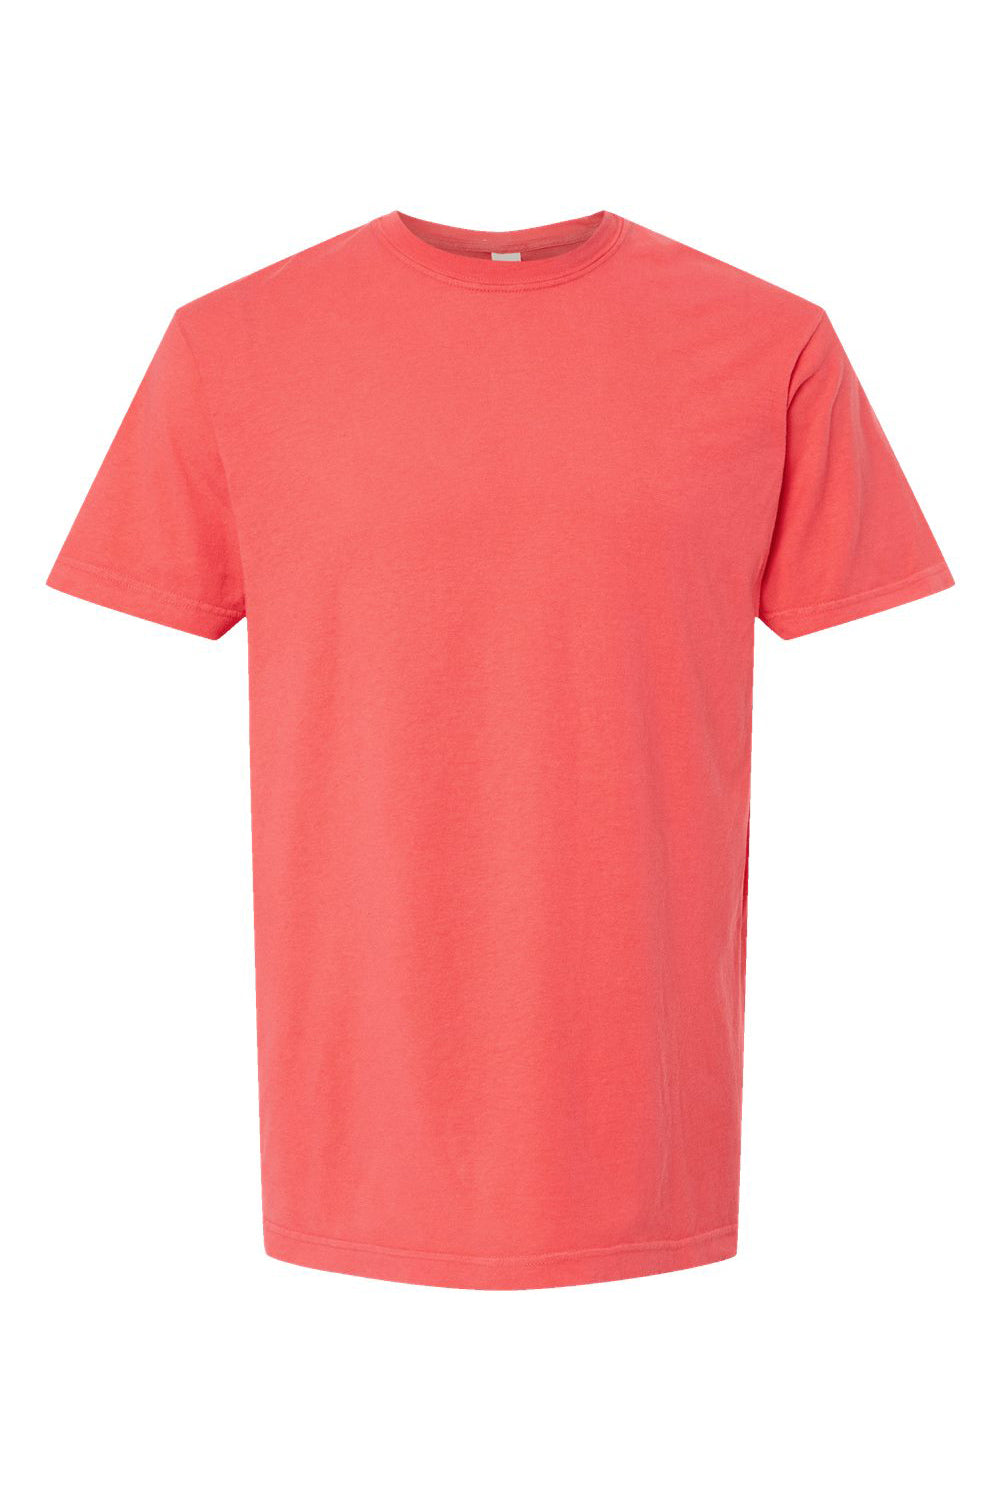 M&O 6500M Mens Vintage Garment Dyed Short Sleeve Crewneck T-Shirt Bright Salmon Flat Front